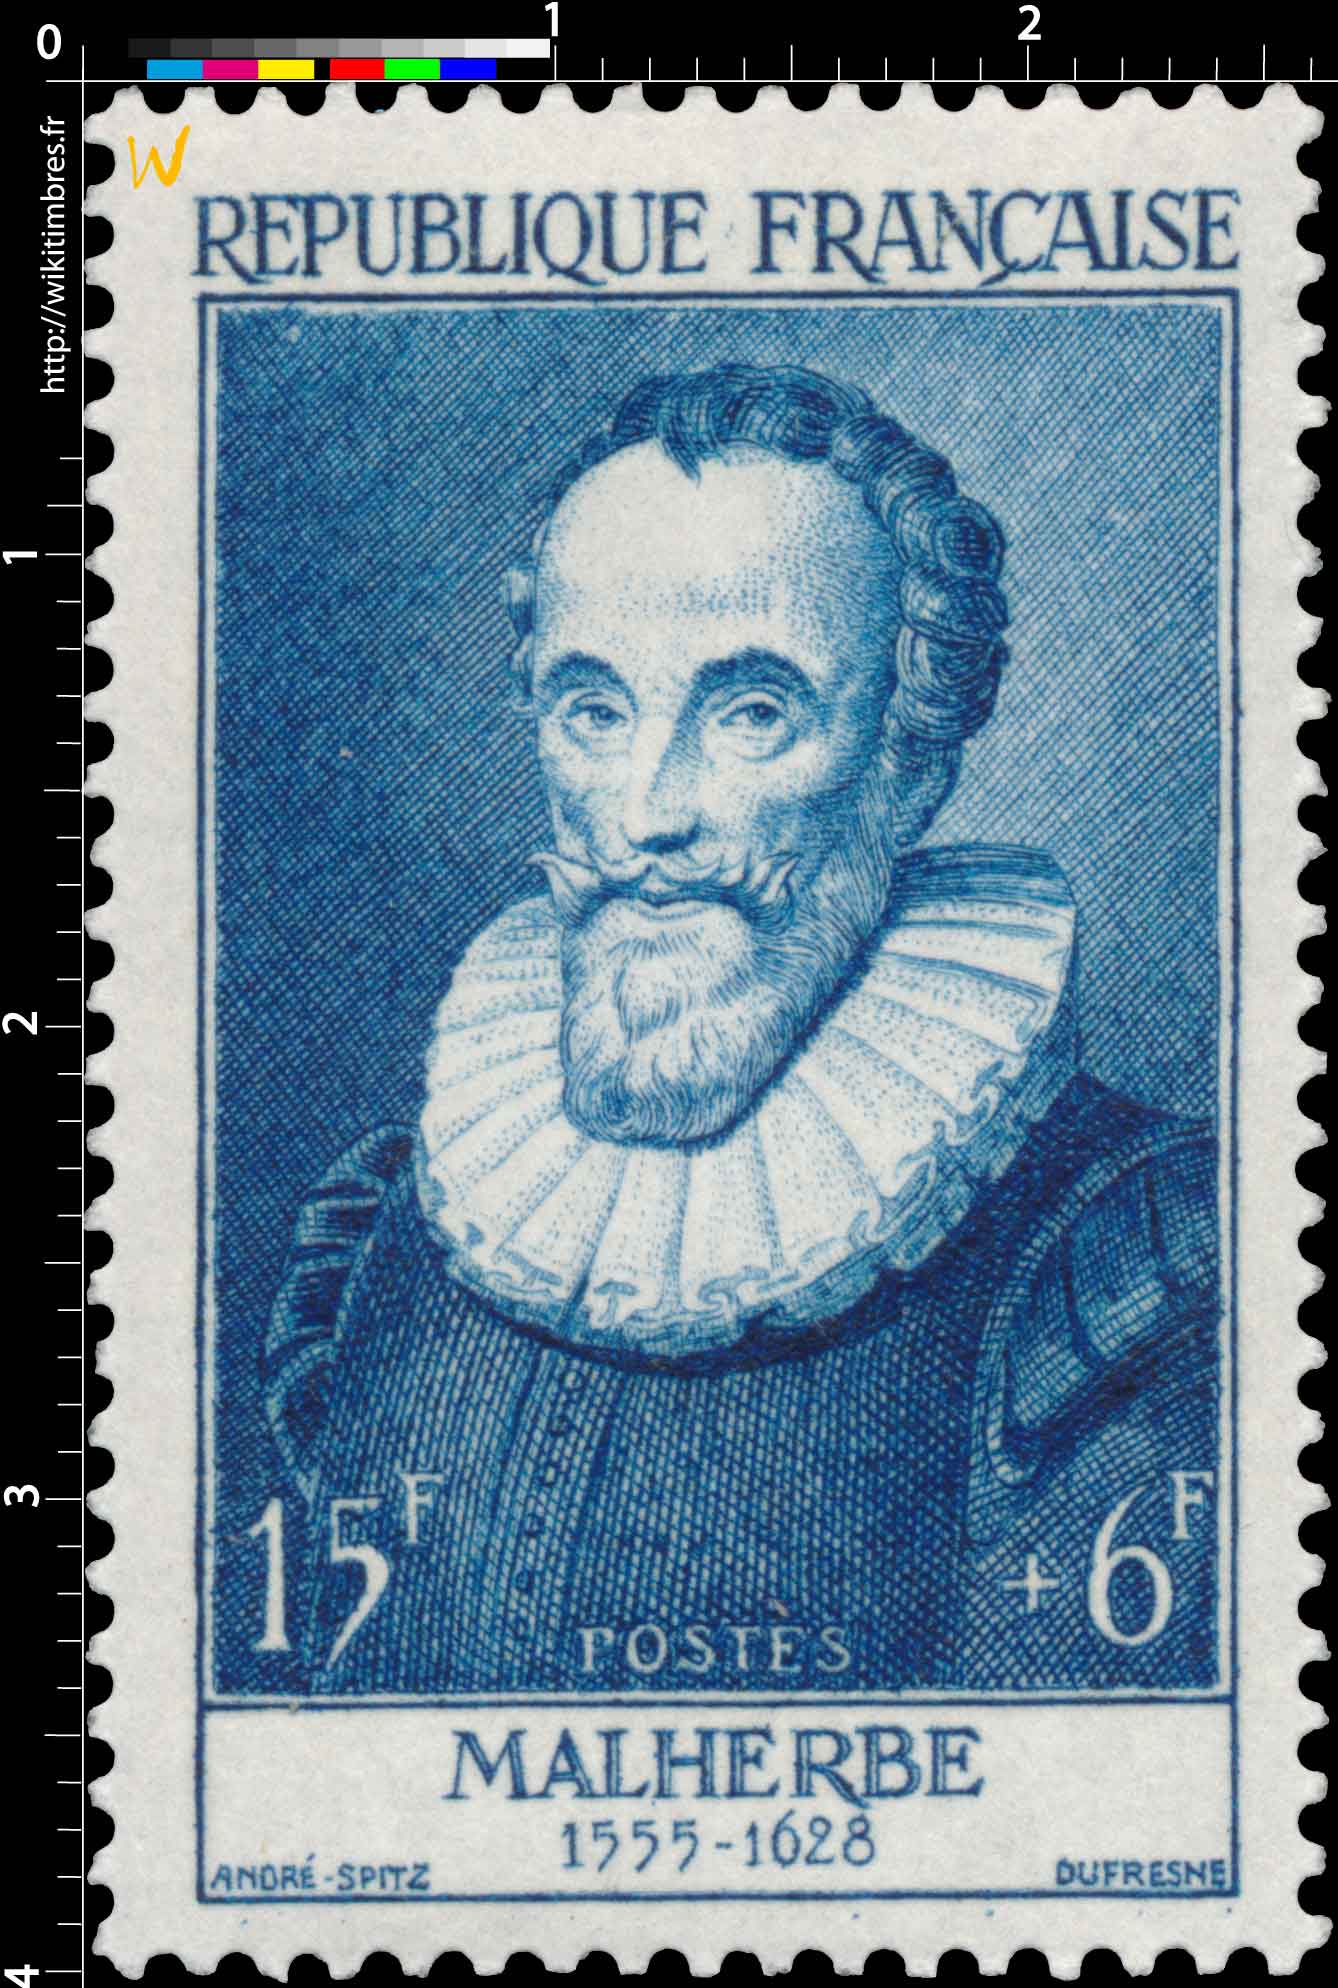 MALHERBE 1555-1628